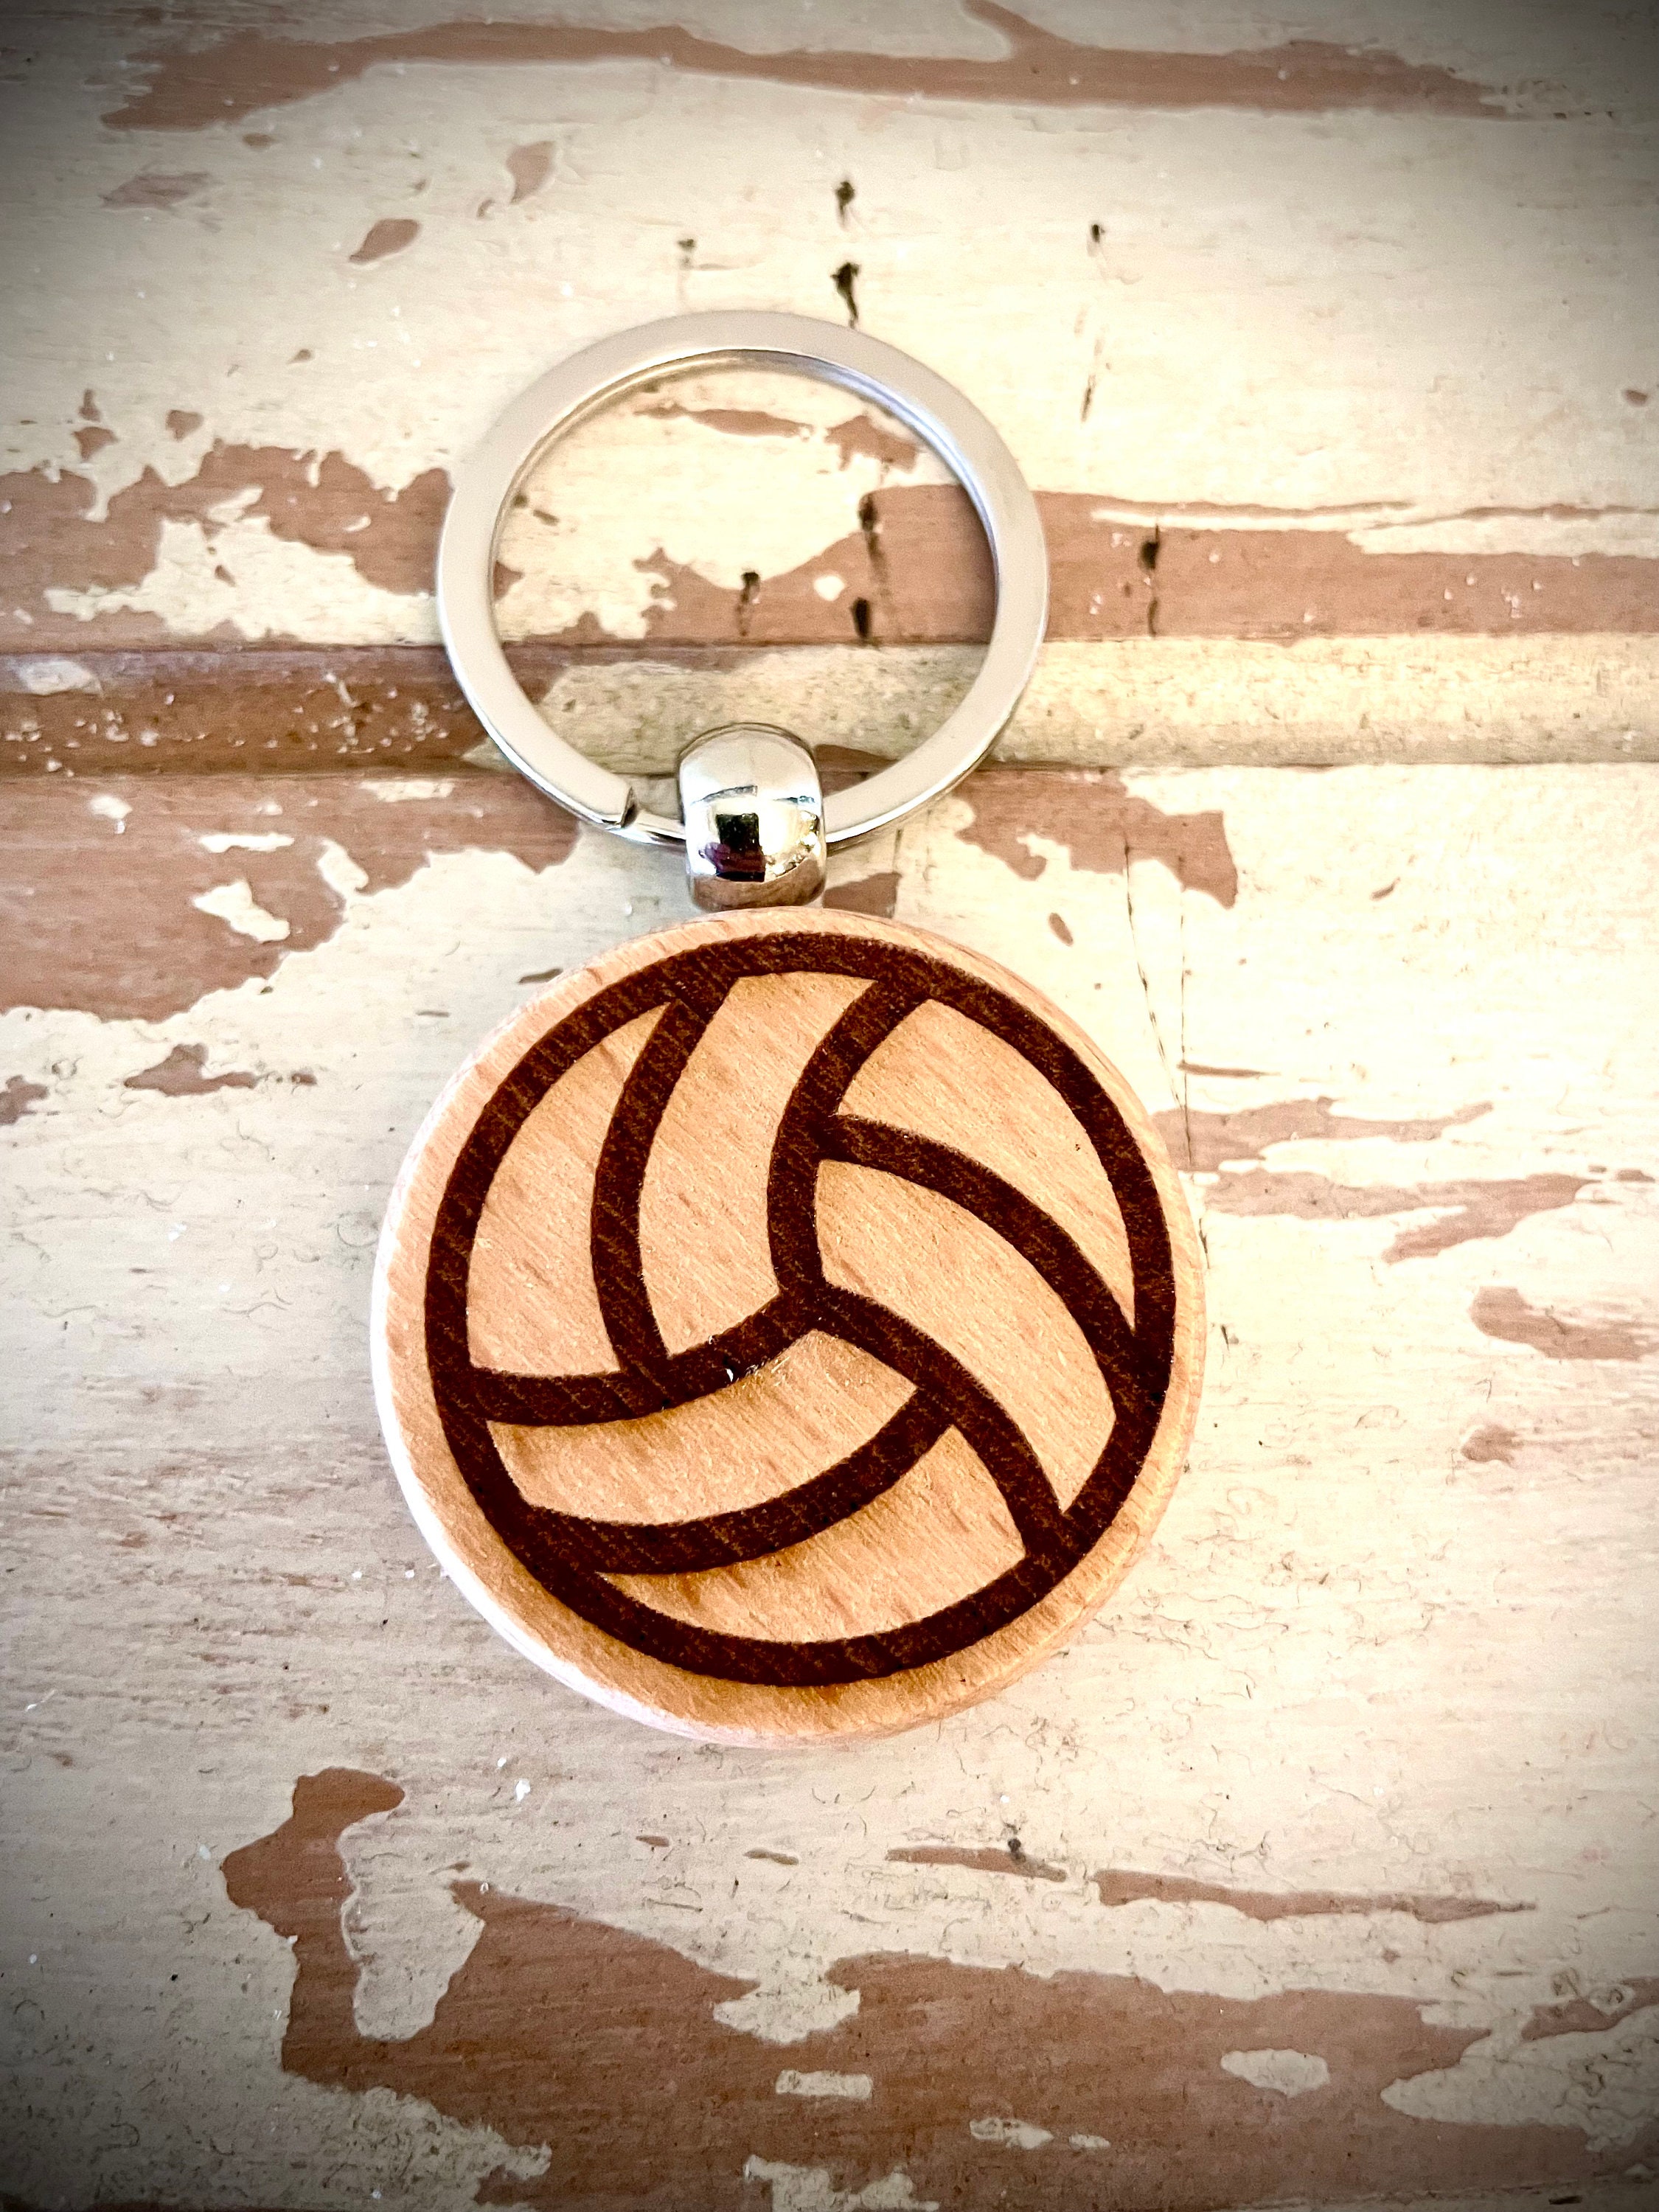 porte-clés de volley-ball avec carte - cadeau de sport - sport - Joli cadeau  à offrir